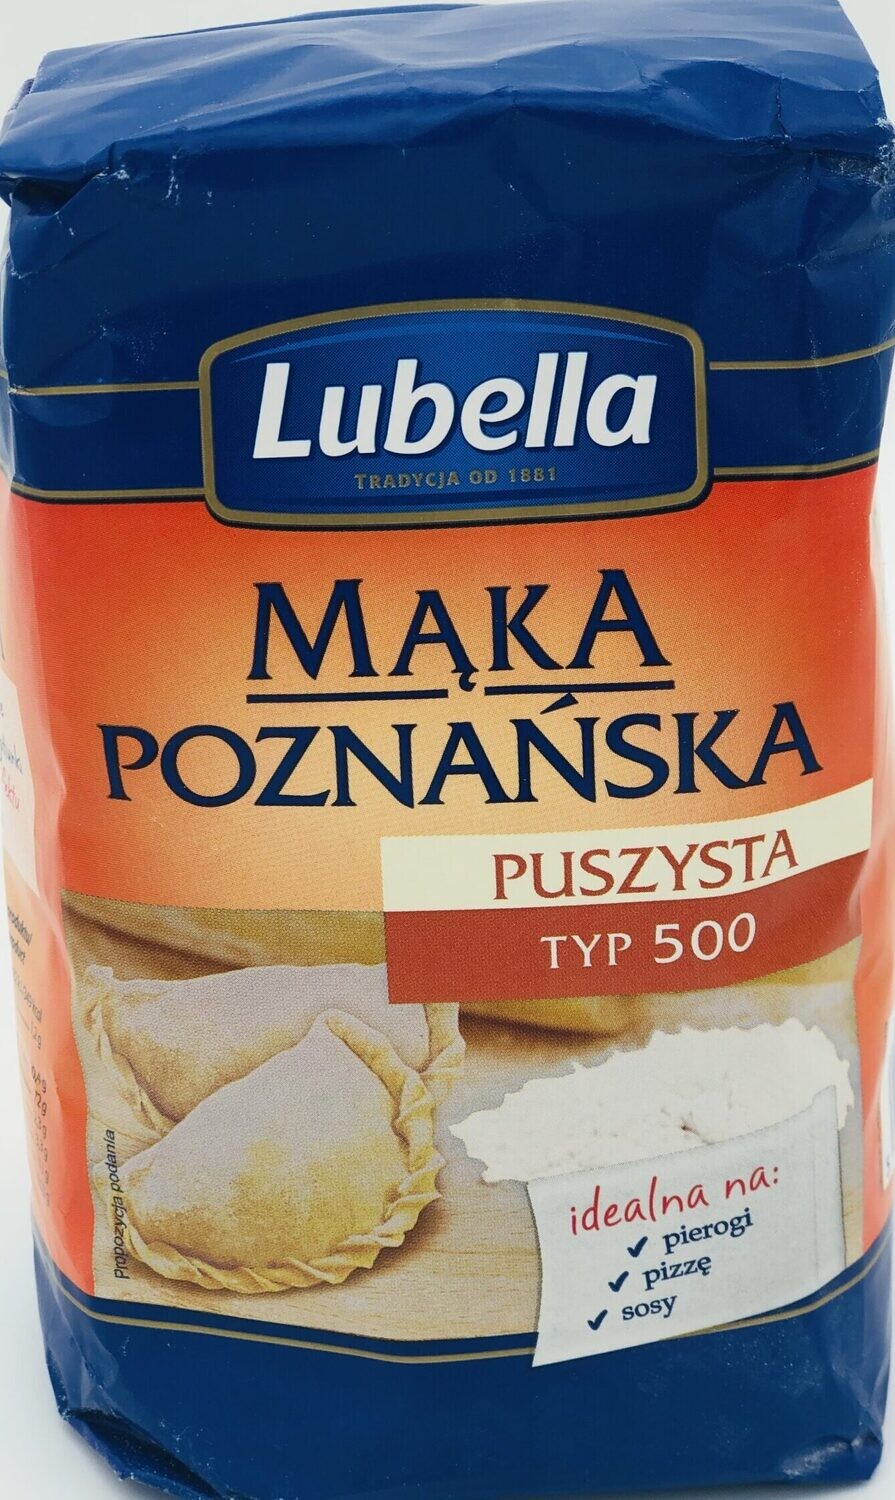 Lubella Poznanska Flour (Type 500) 2.2 lbs (1kg)